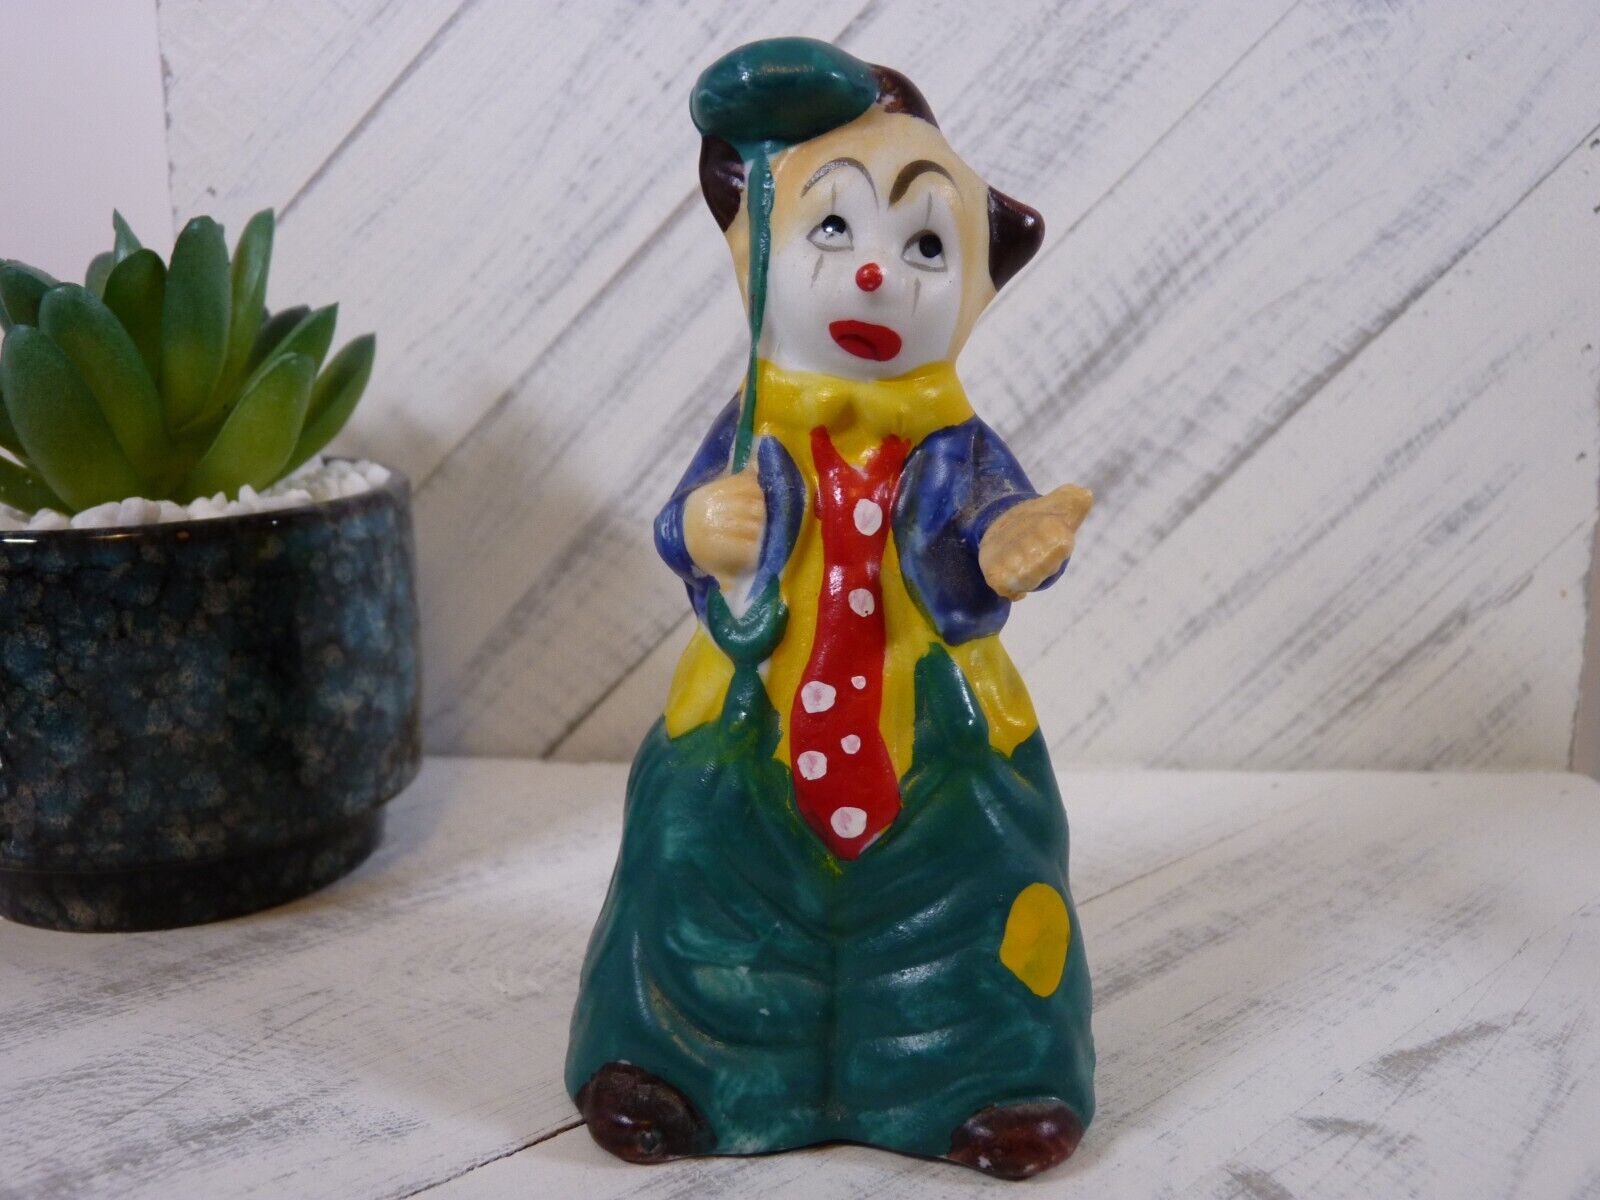 Vintage J.S.N.Y. Ceramic Hobo Clown Bell Figurine with Umbrella - L1